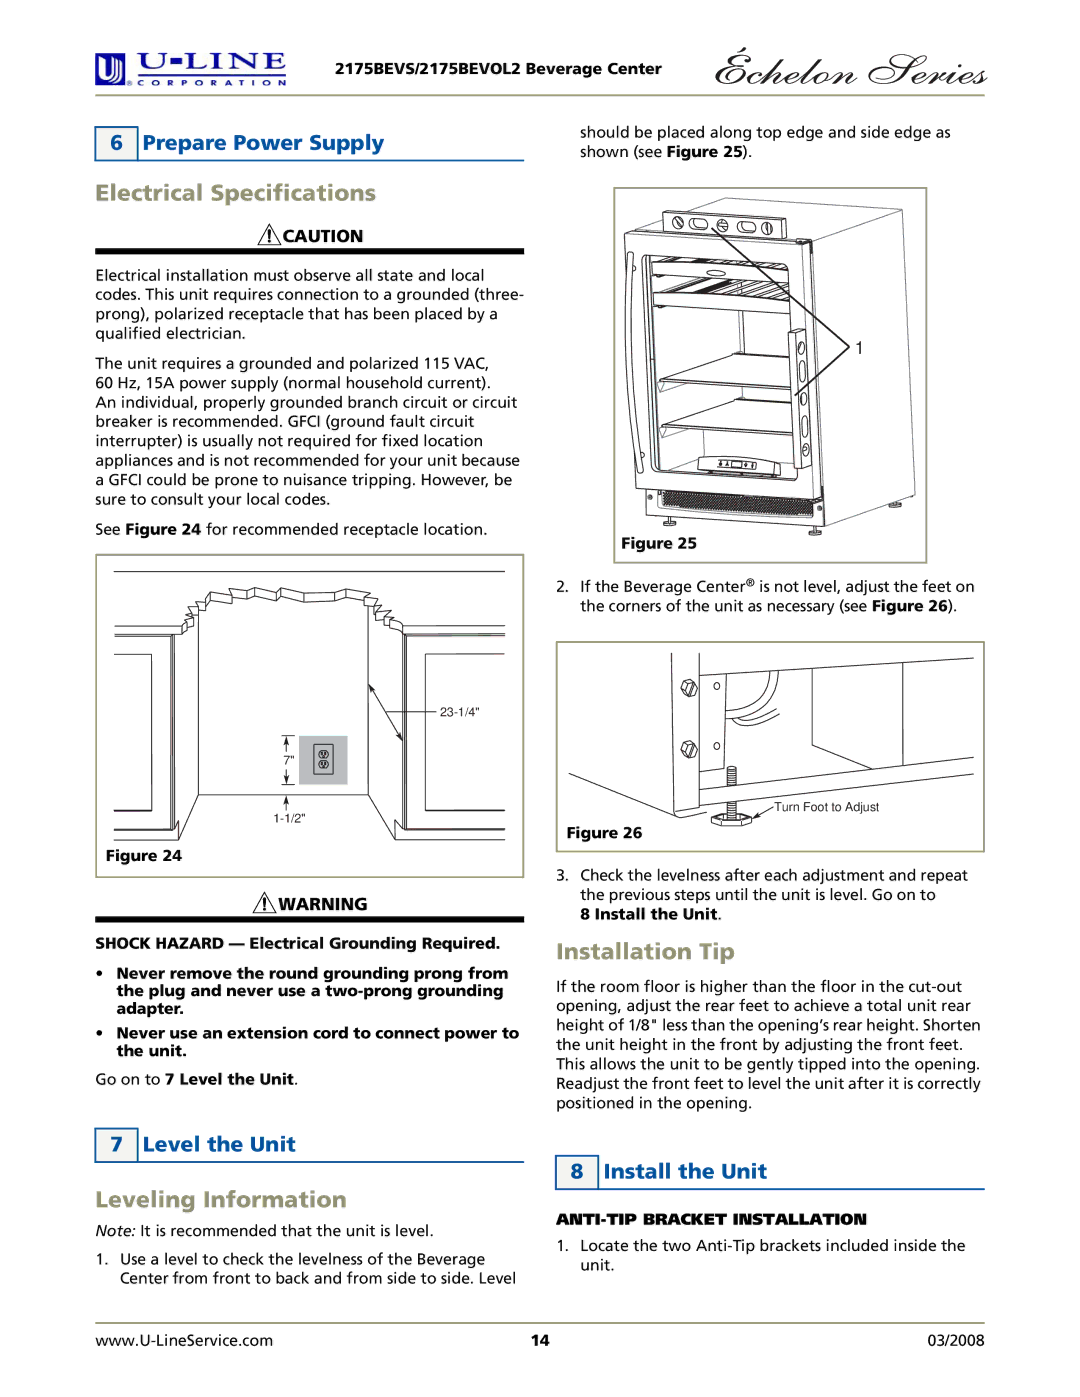 U-Line 2175BEVOL2 manual Electrical Specifications, Installation Tip, Leveling Information 